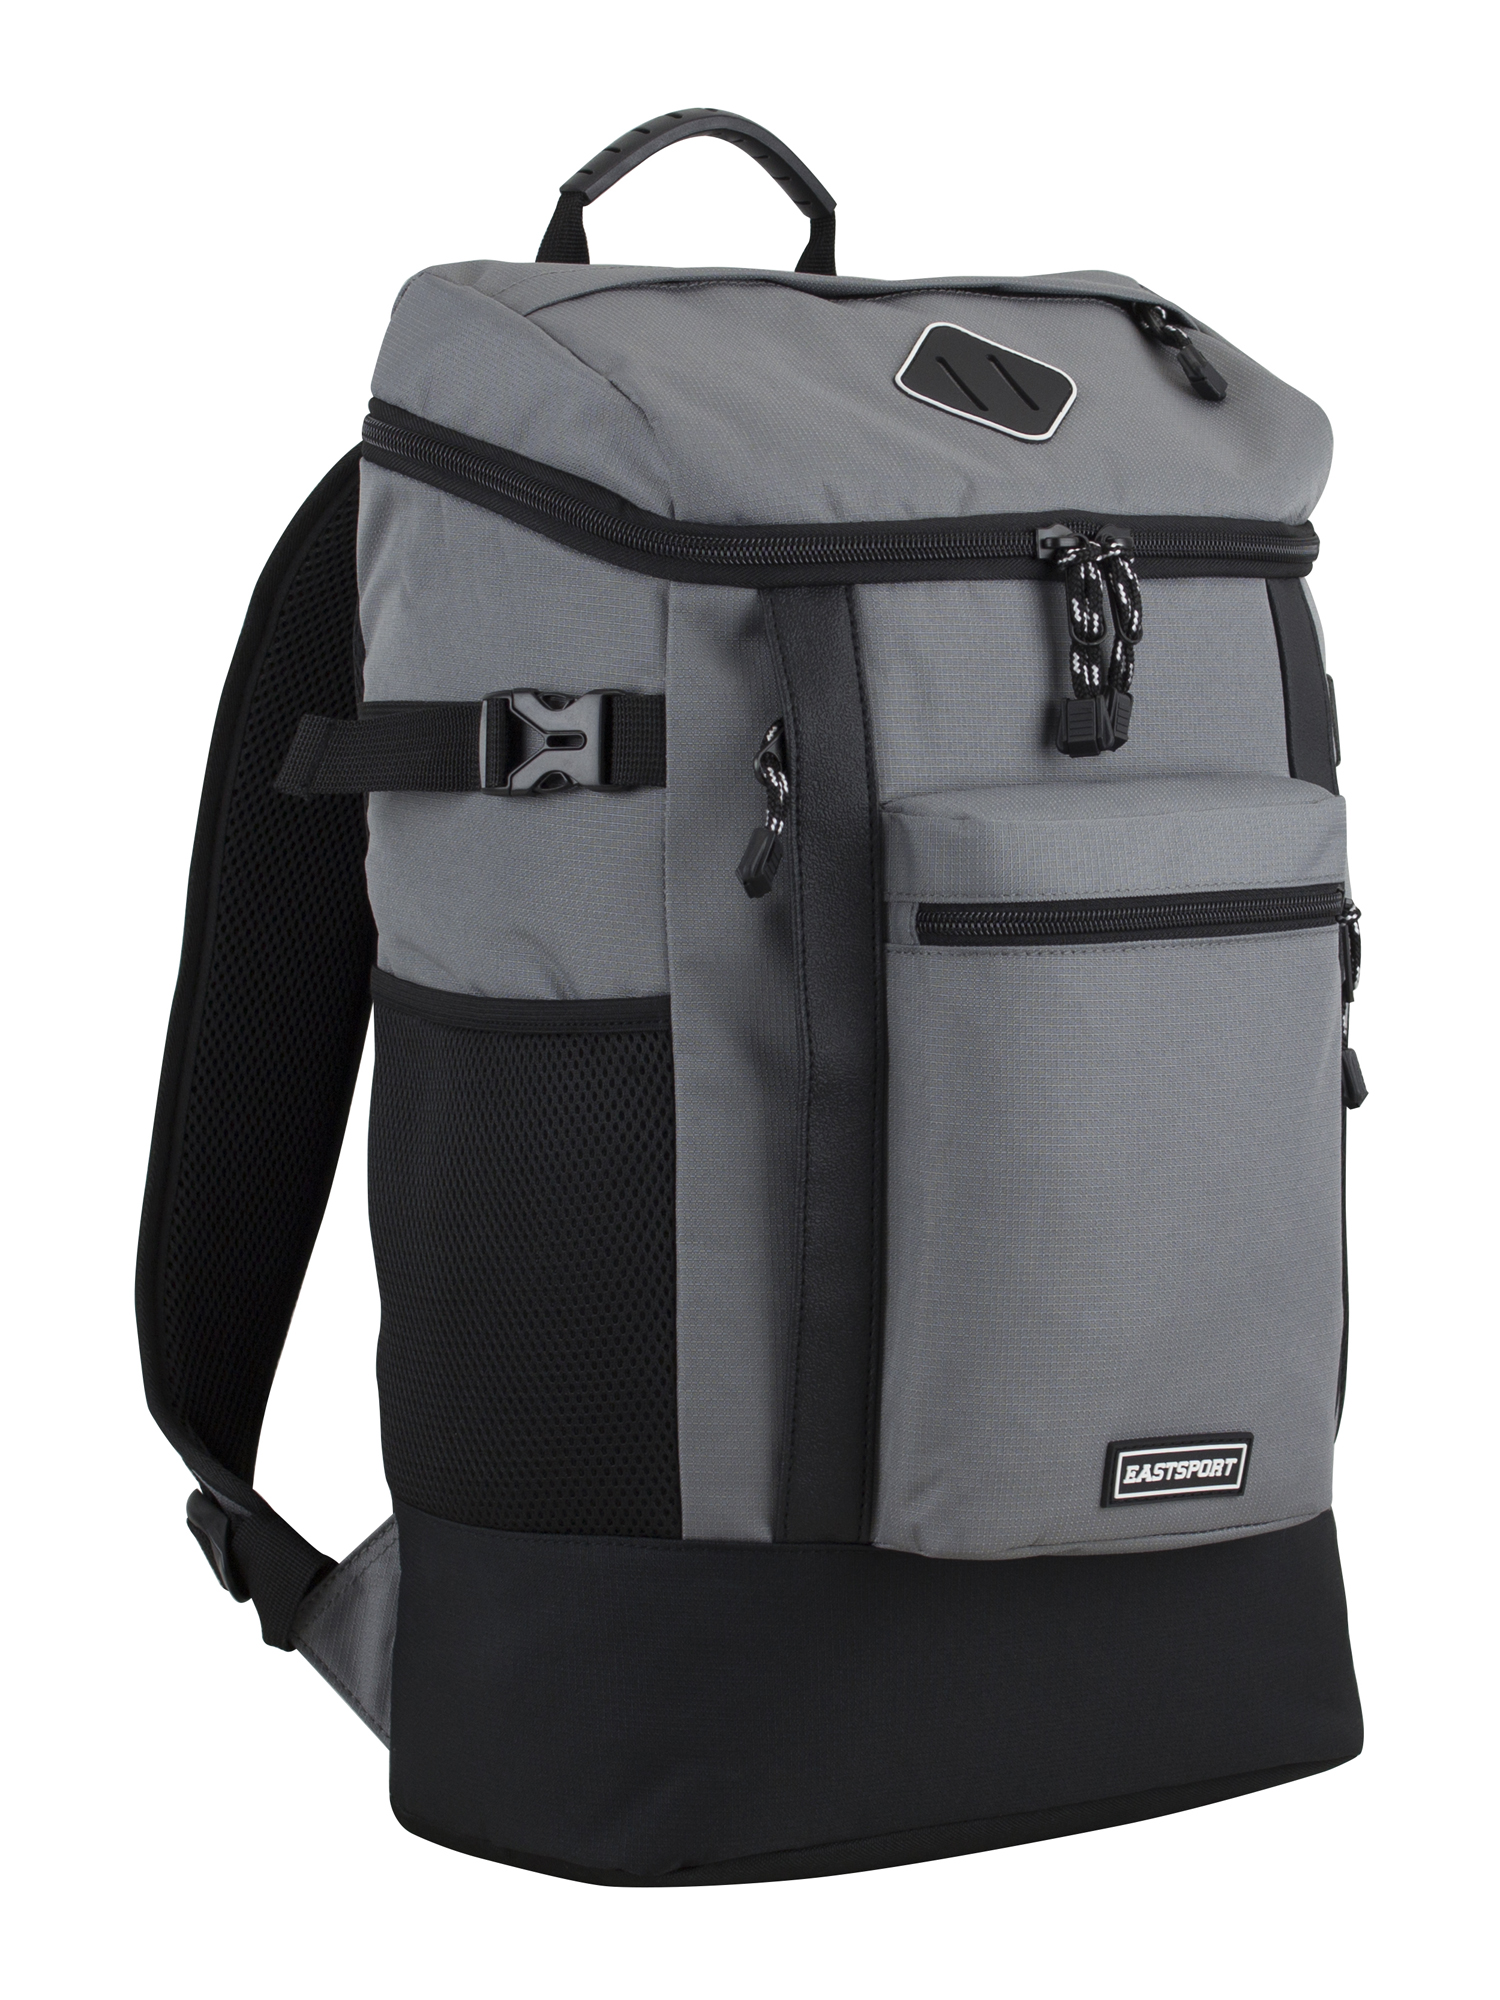 Eastsport Unisex Rival 18.5" Laptop Backpack, Grey Flannel - image 1 of 9